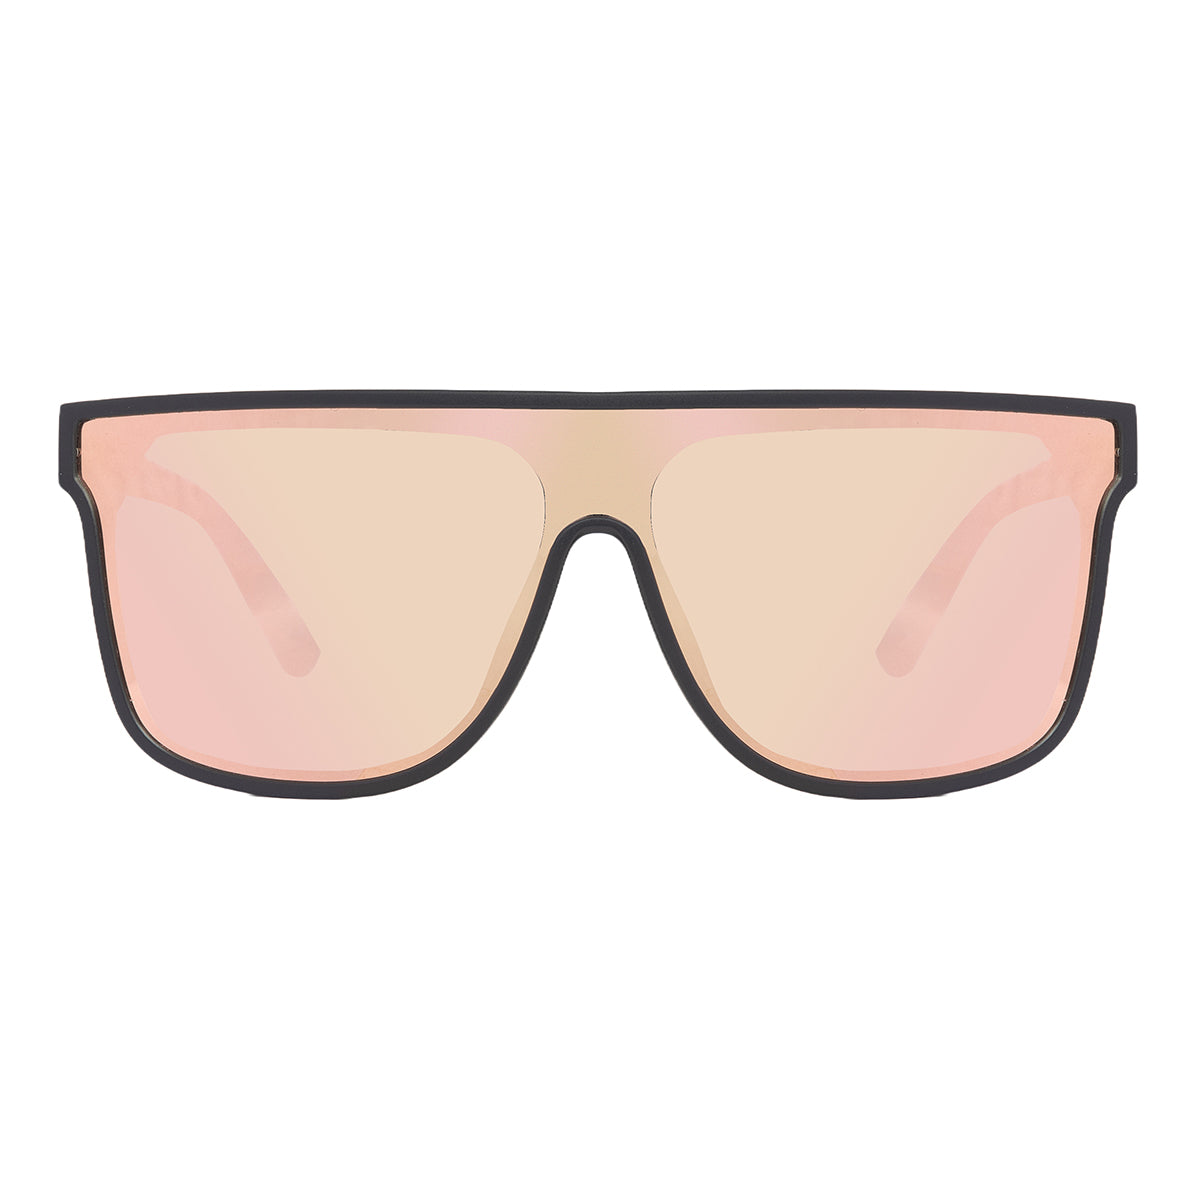 Magnite Sunglasses (Polarized Protection)